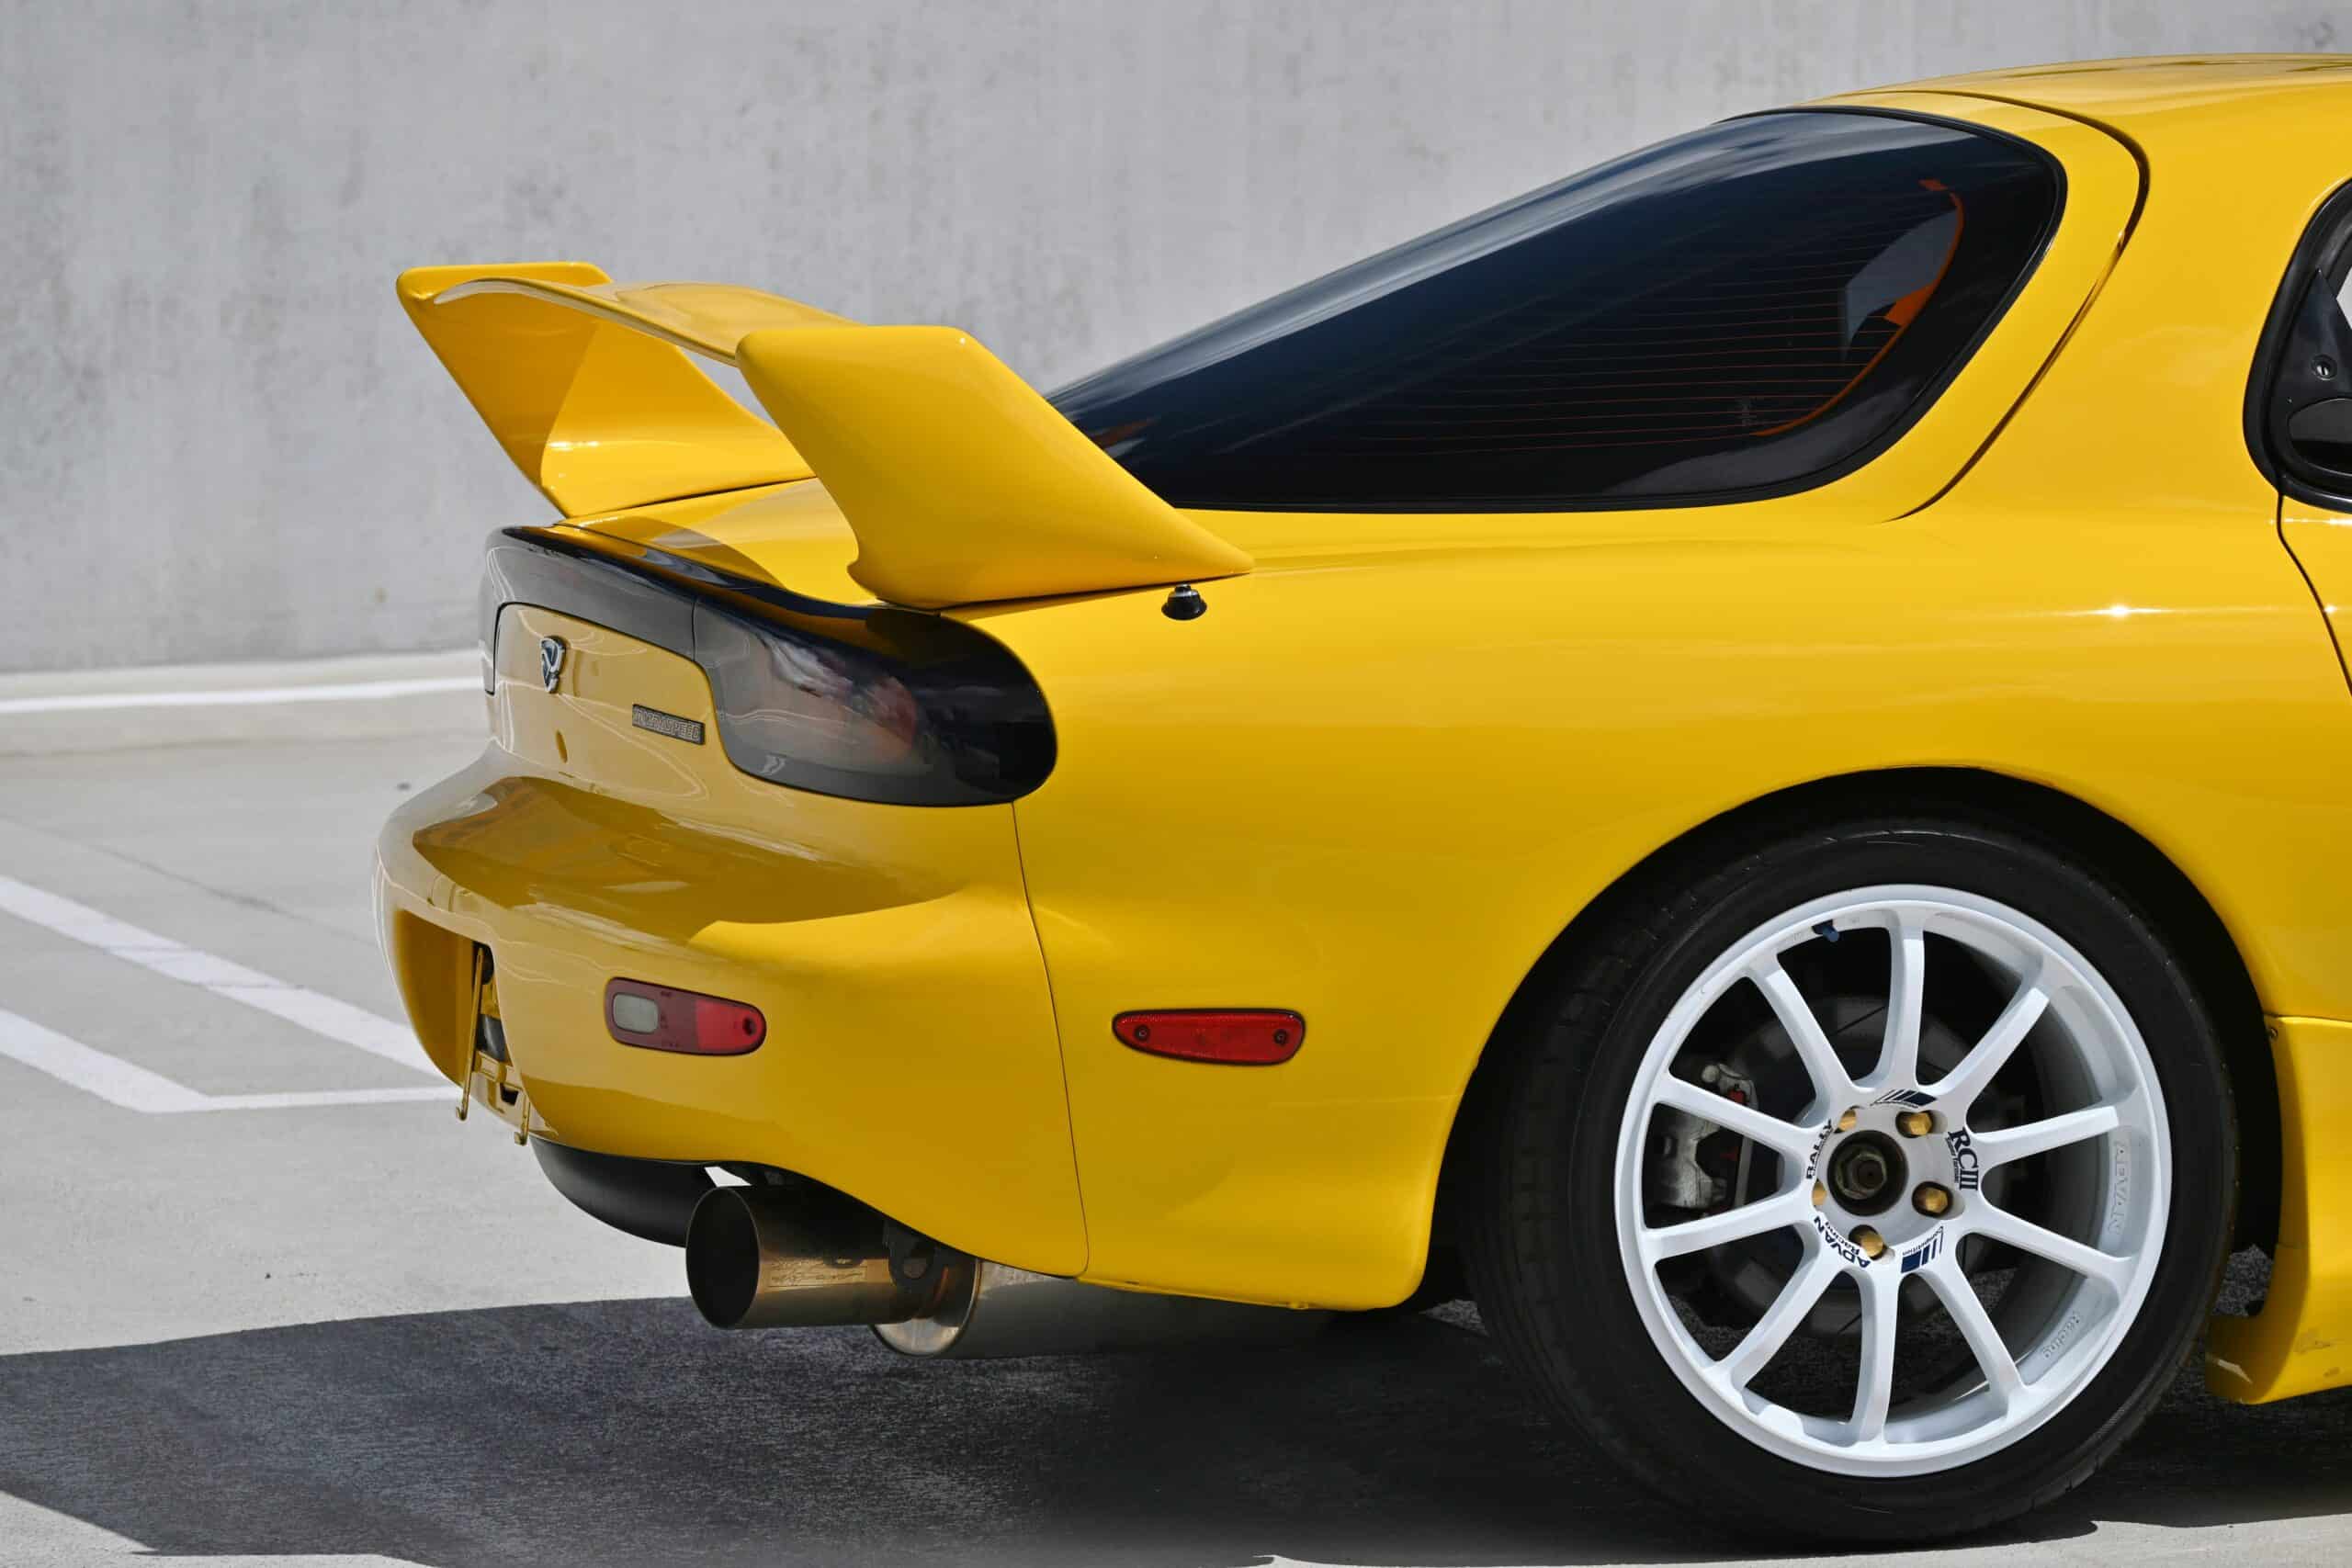 1997 Mazda RX-7 FD3S Garrett 500HP Single Turbo / V-Mount / Advan Racing Wheels / HKS Coilovers / JDM